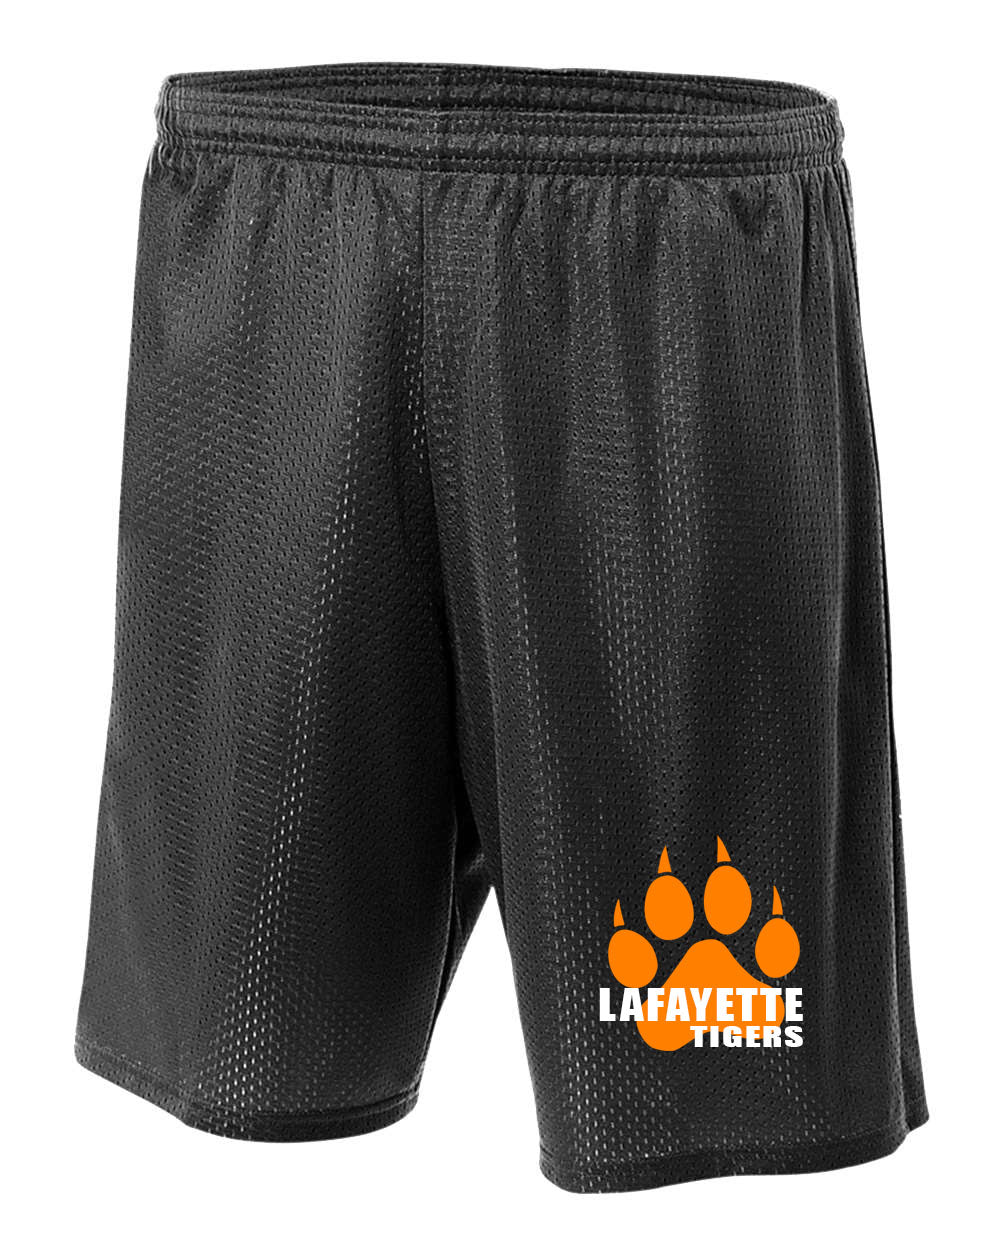 Lafayette Tigers Design 7 Mesh Shorts